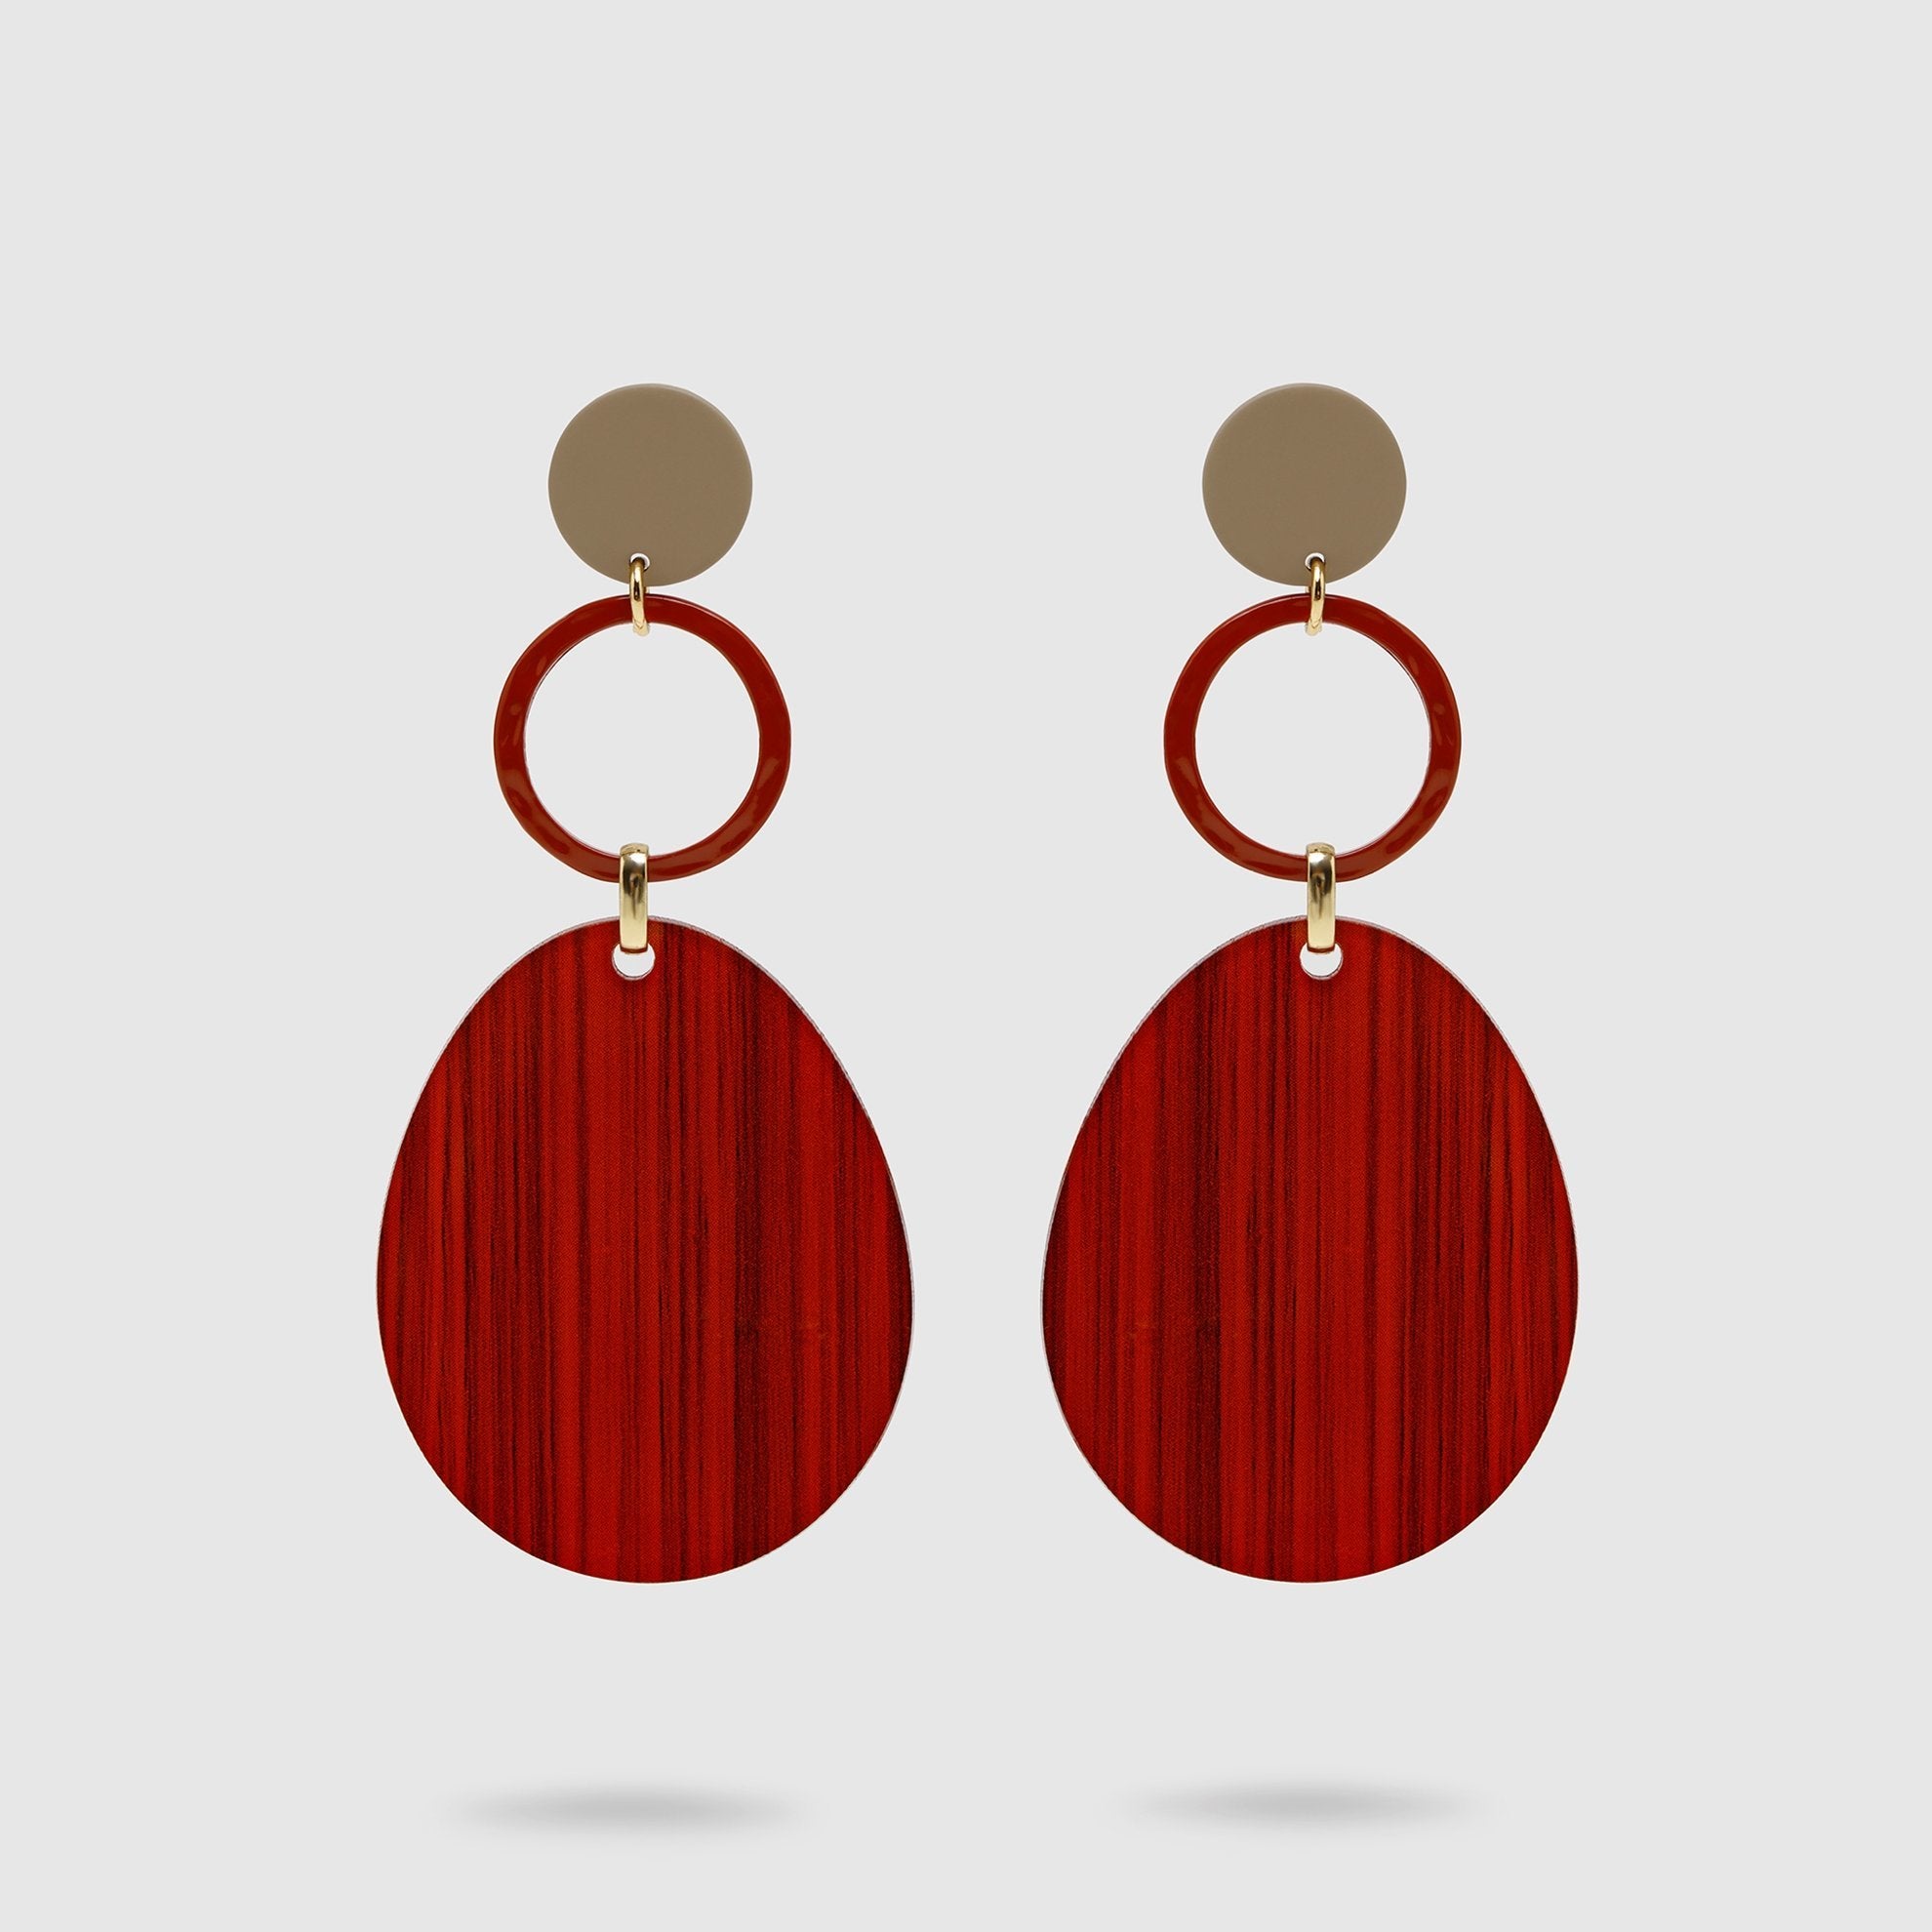 Minimalistic Red Earrings